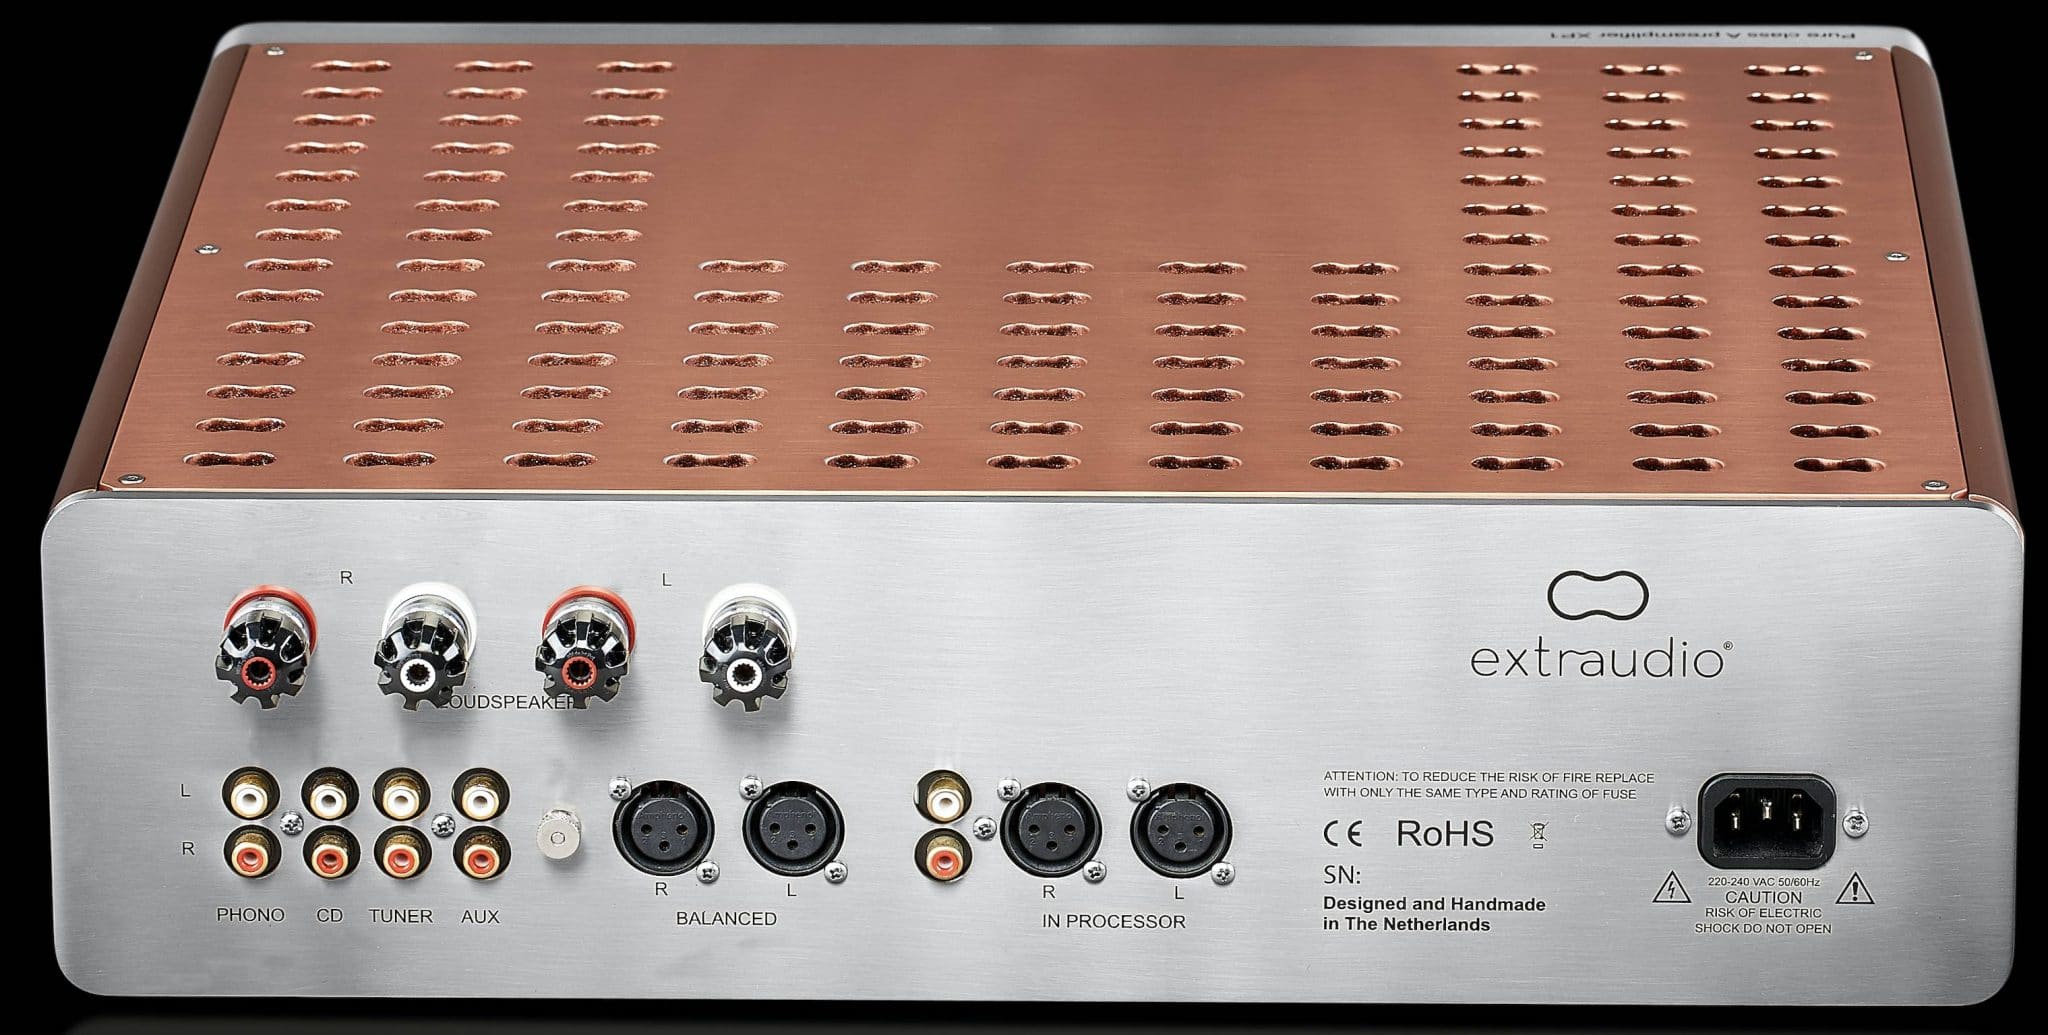 X250 AD Premium Series From Extraudio